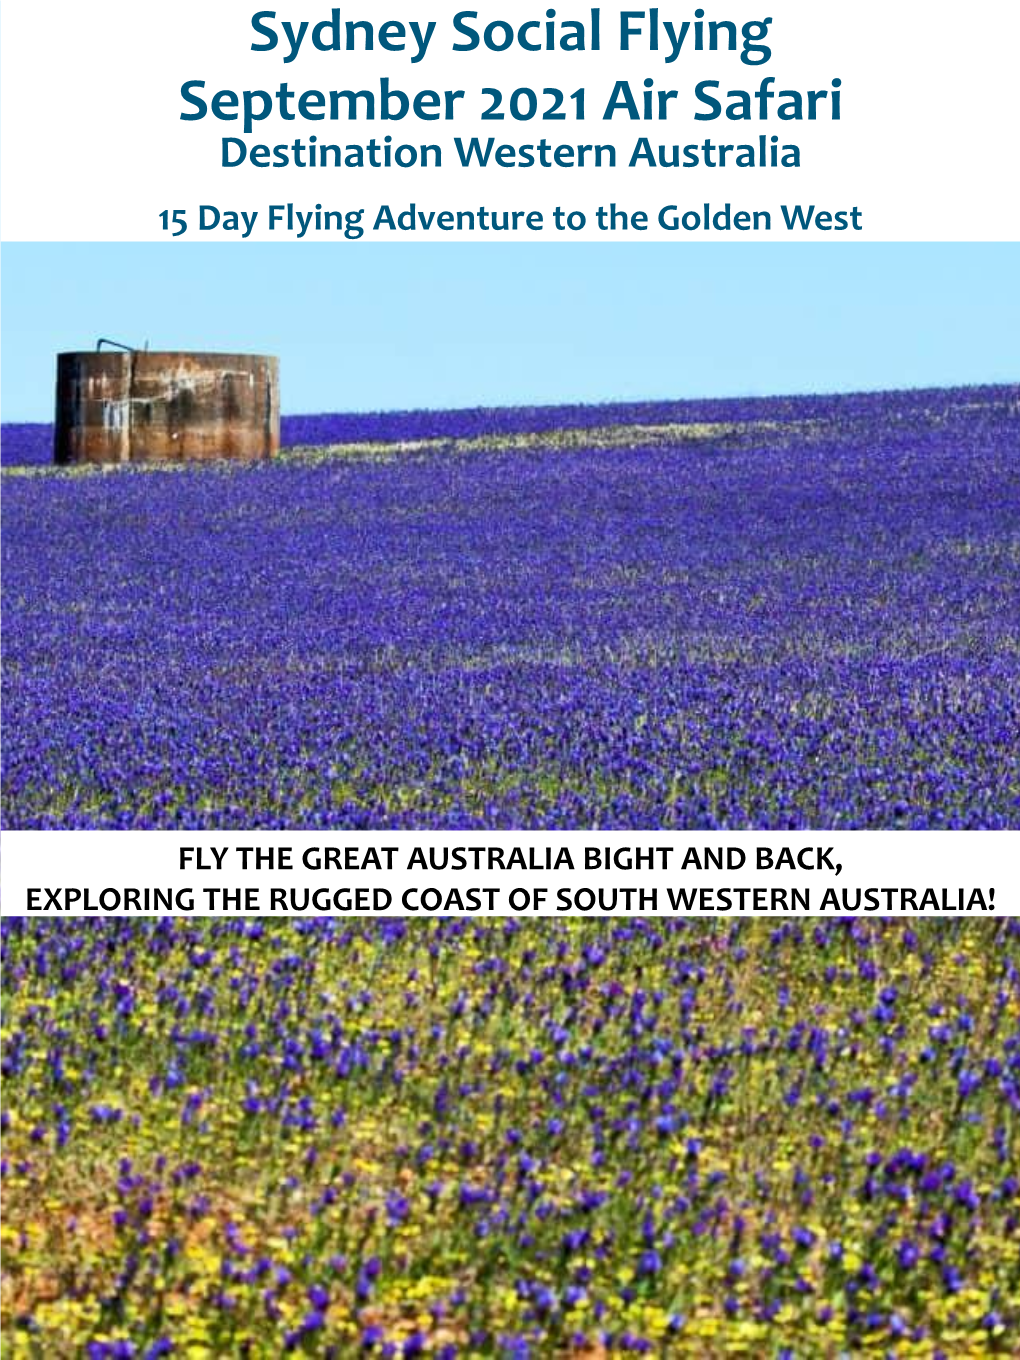 Sydney Social Flying September 2021 Air Safari Destination Western Australia 15 Day Flying Adventure to the Golden West